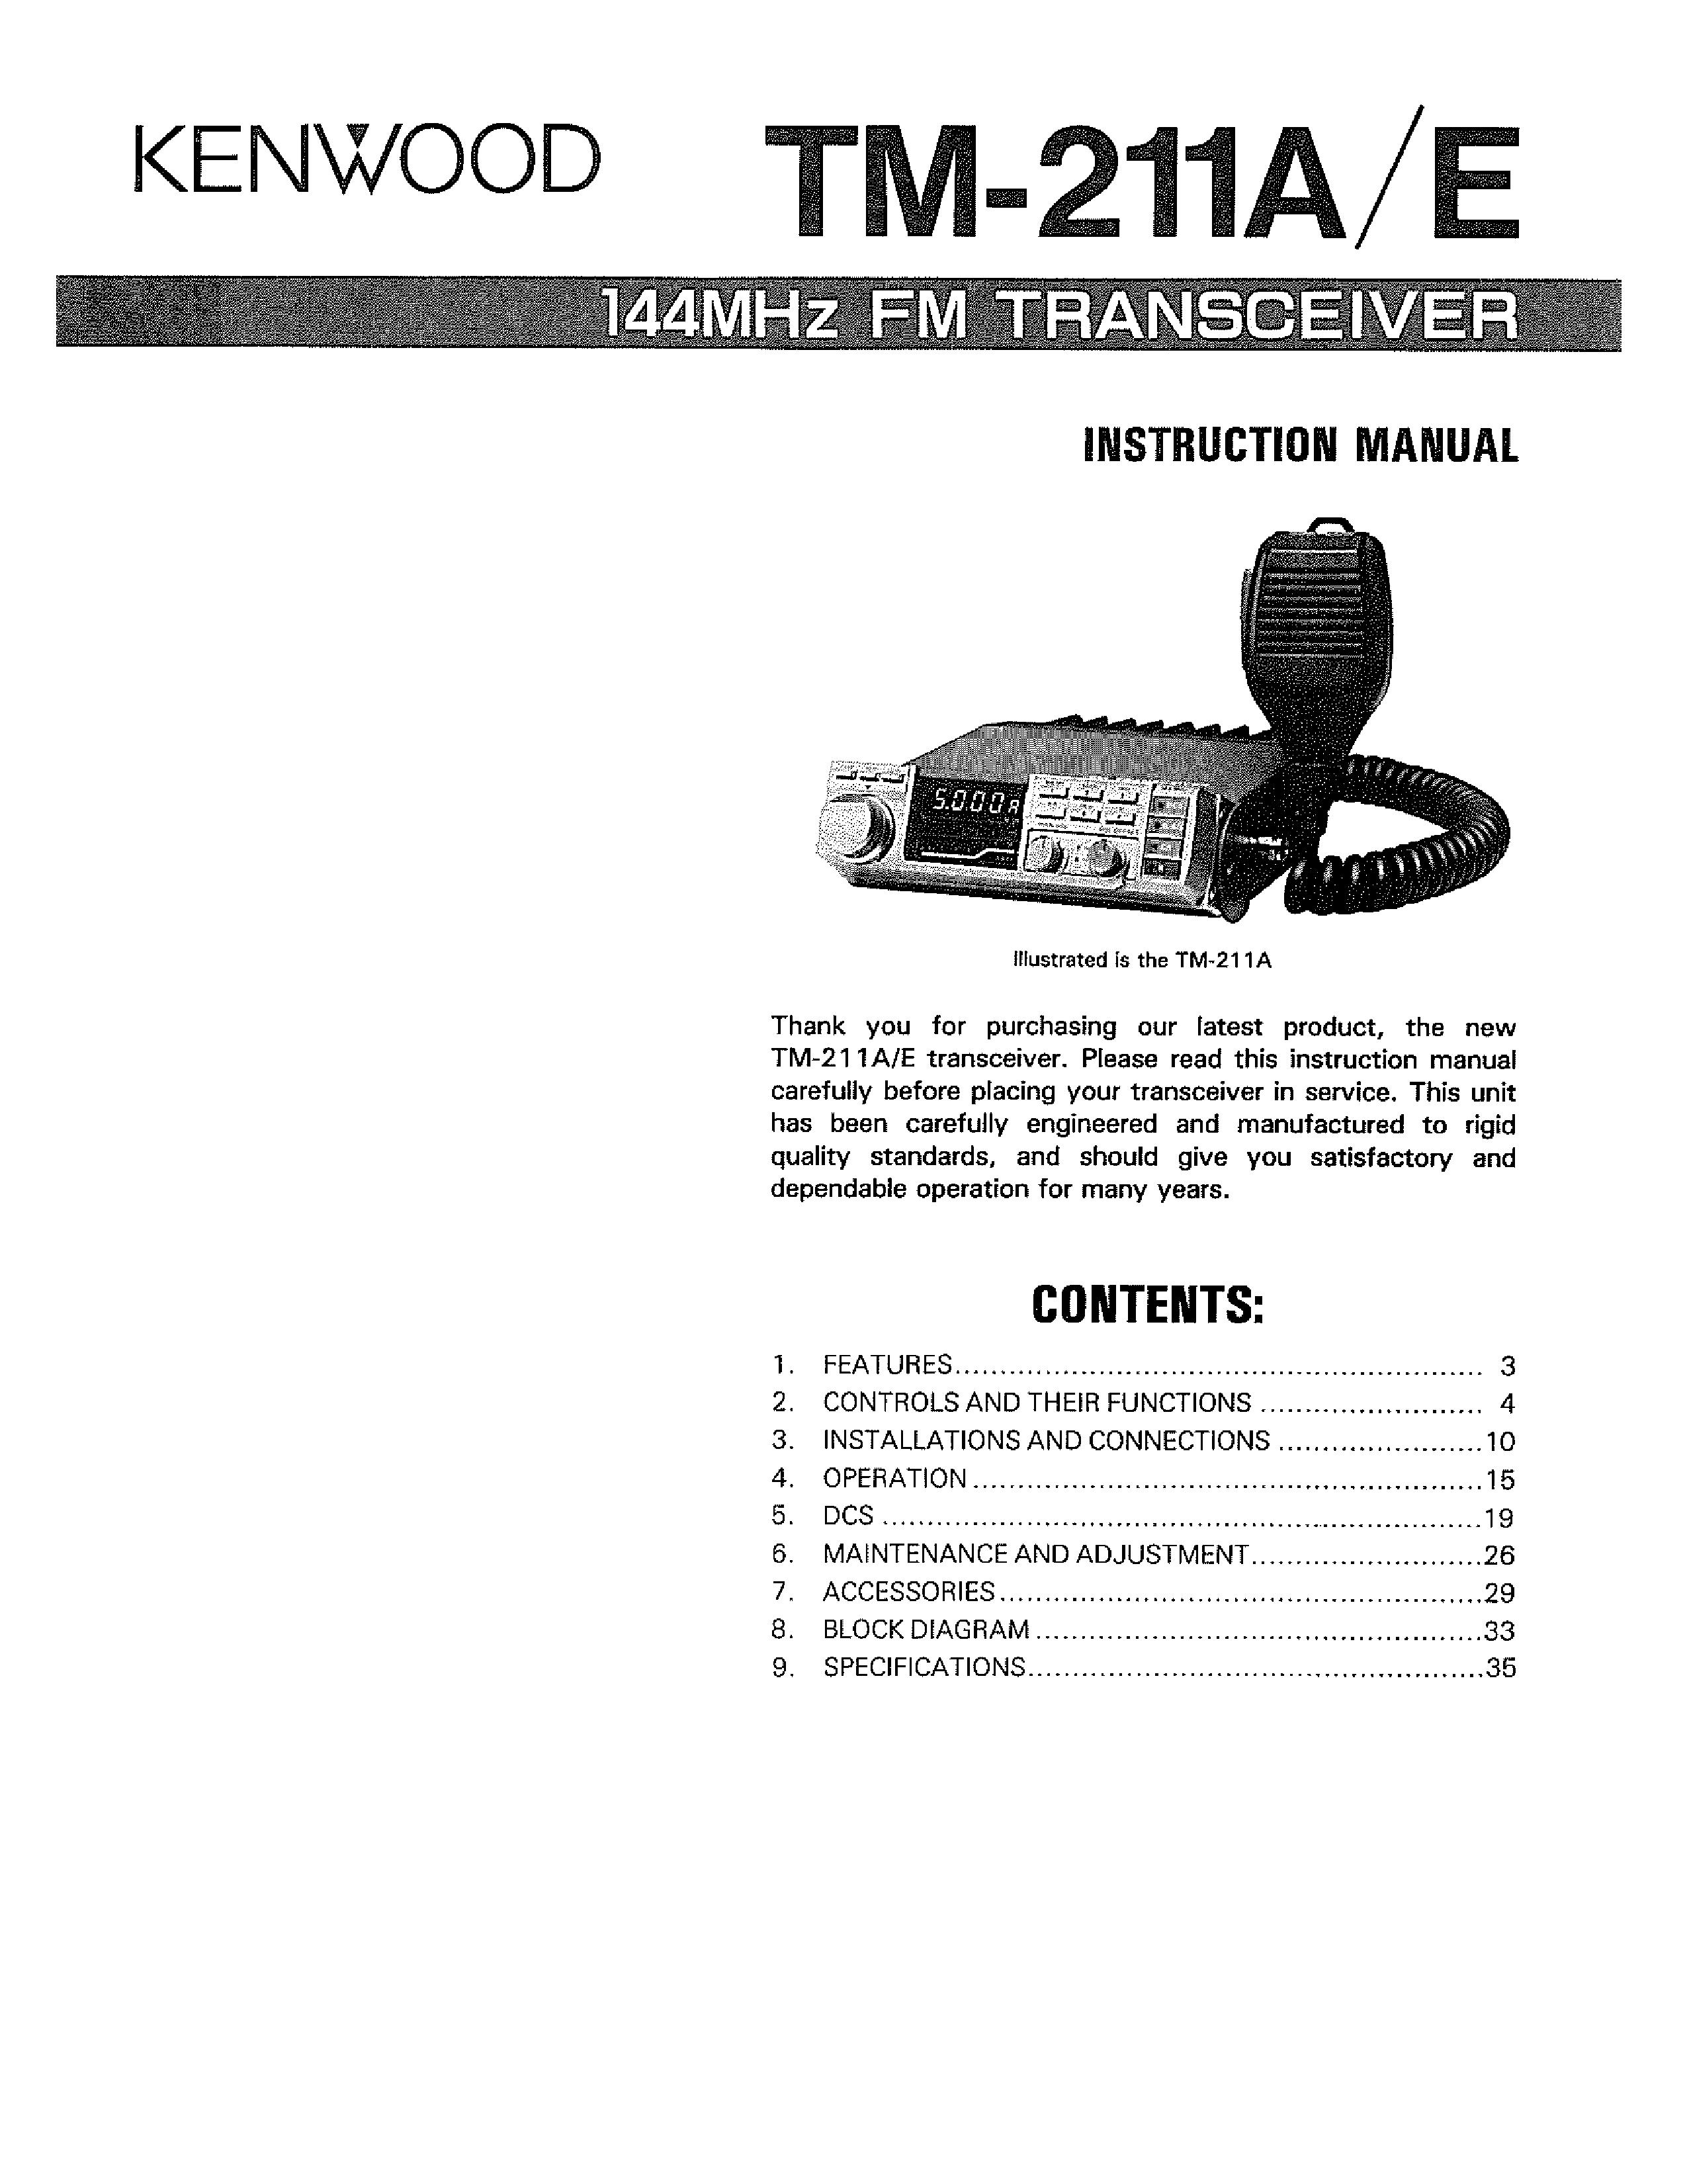 Kenwood 144mhz fm transceiver Marine Radio User Manual